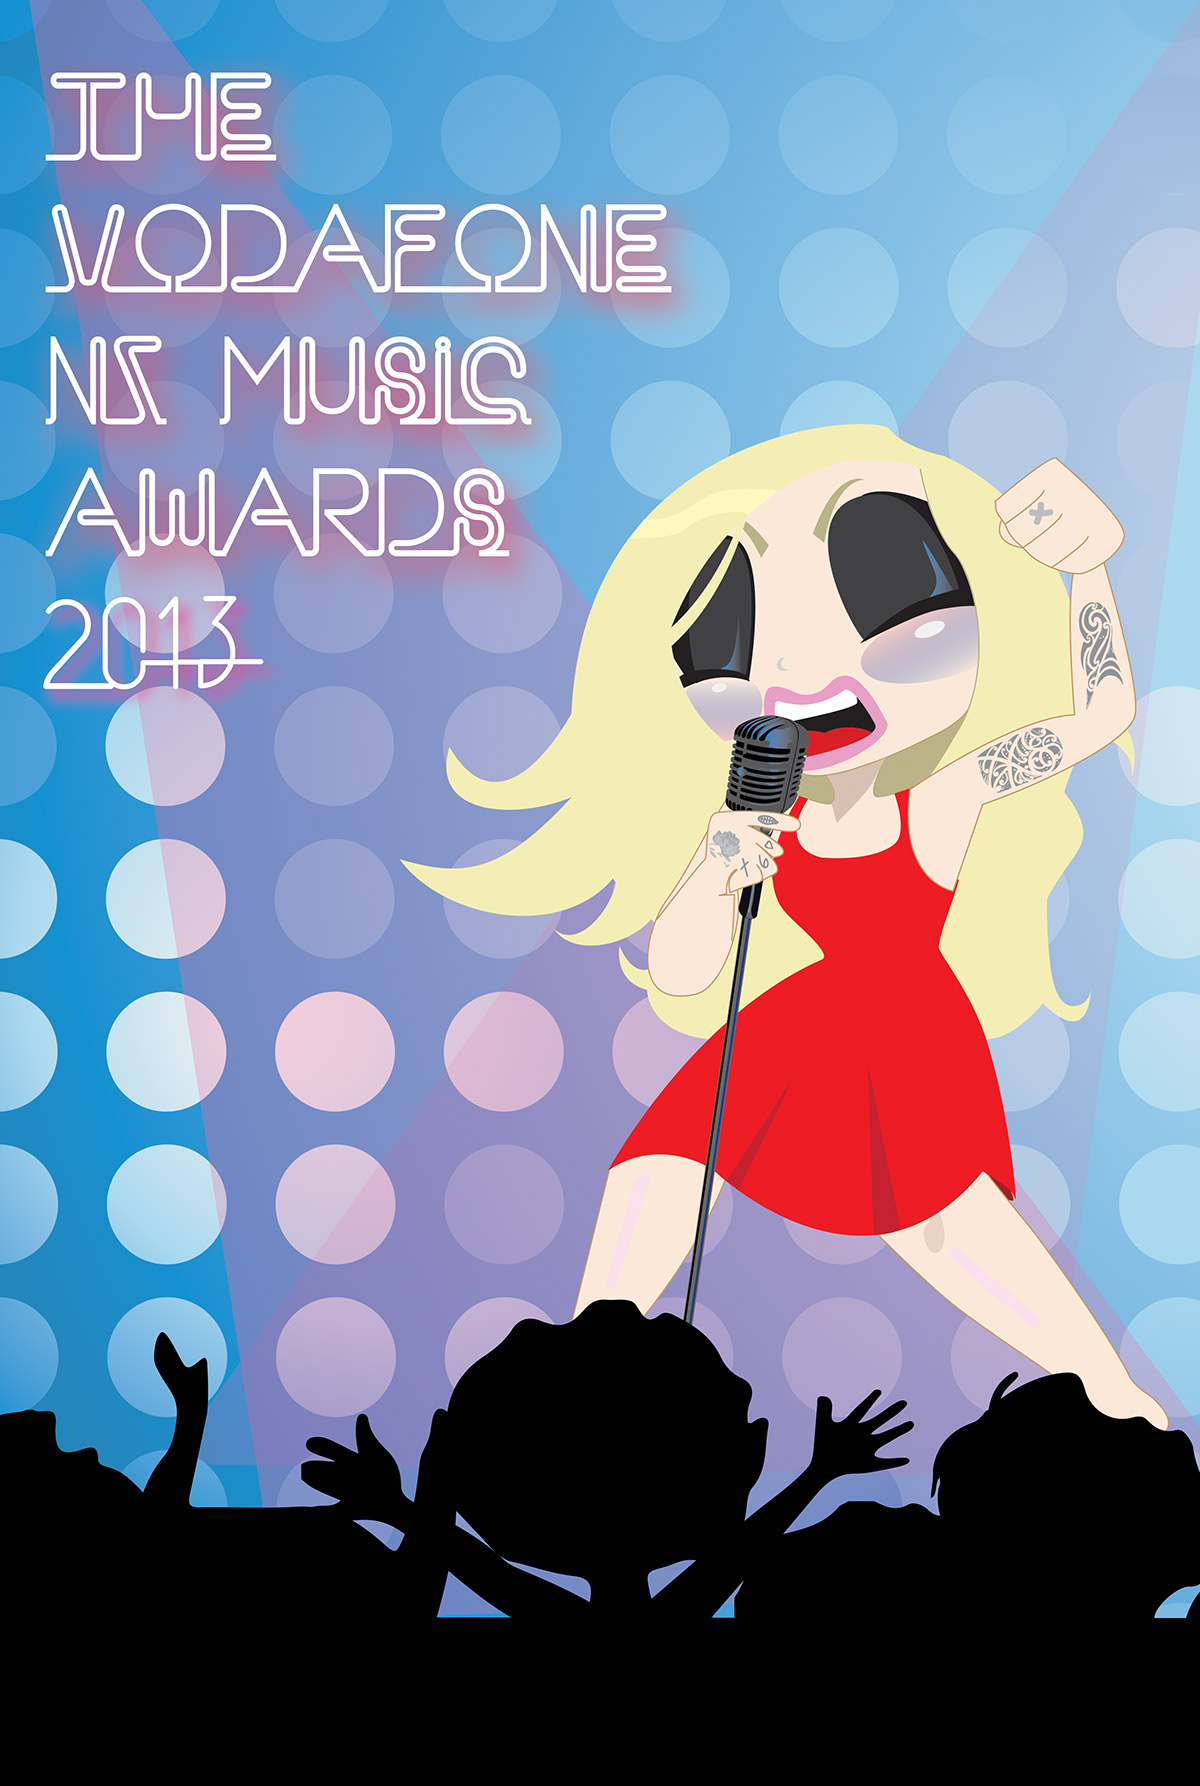 music awards poster vodafone New Zealand